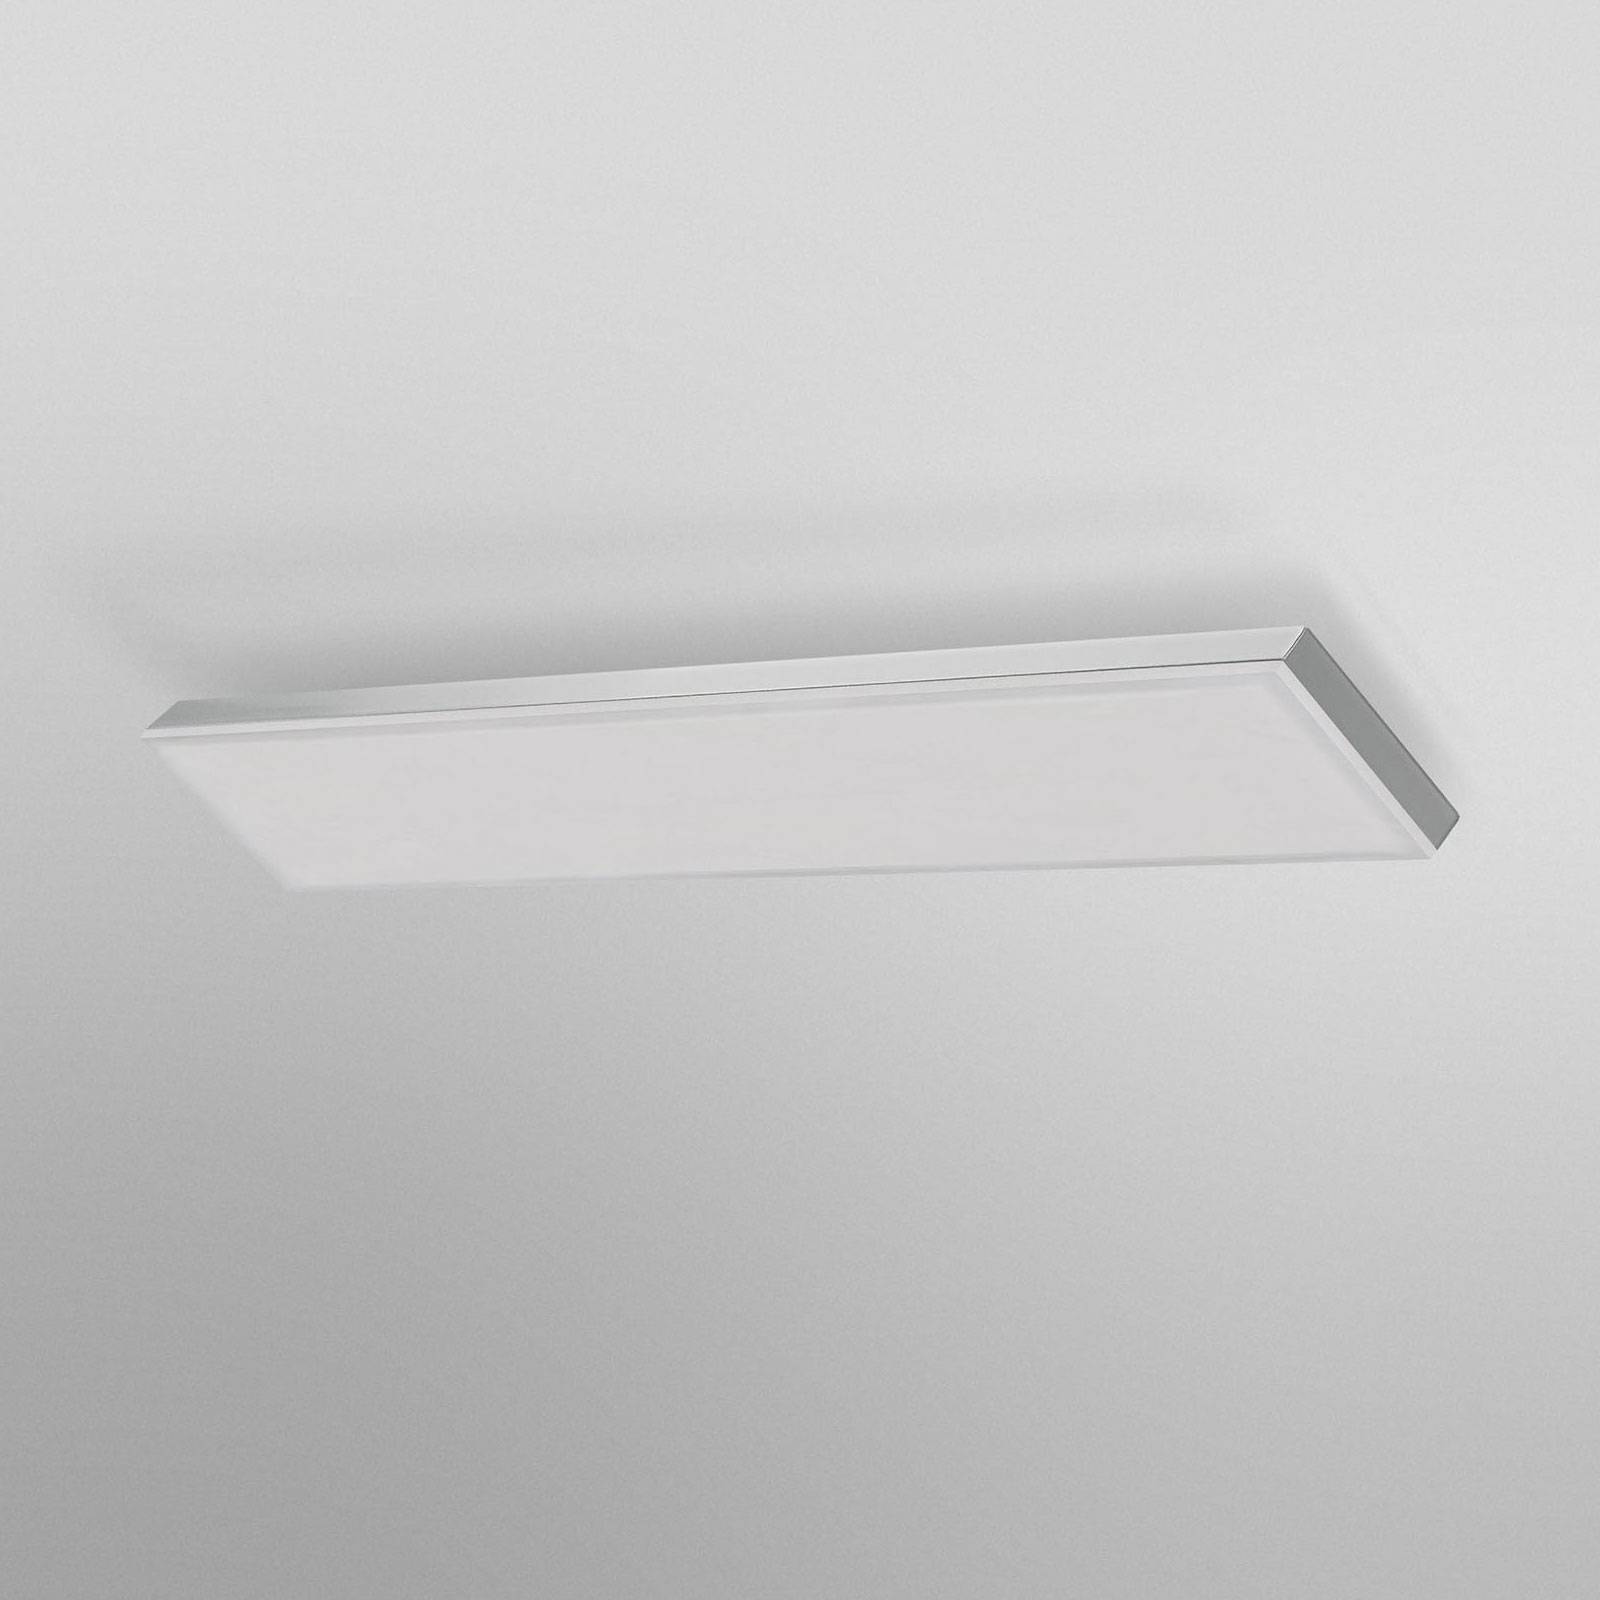 LEDVANCE SMART+ WiFi Planon LED-Panel CCT 60x10cm günstig online kaufen